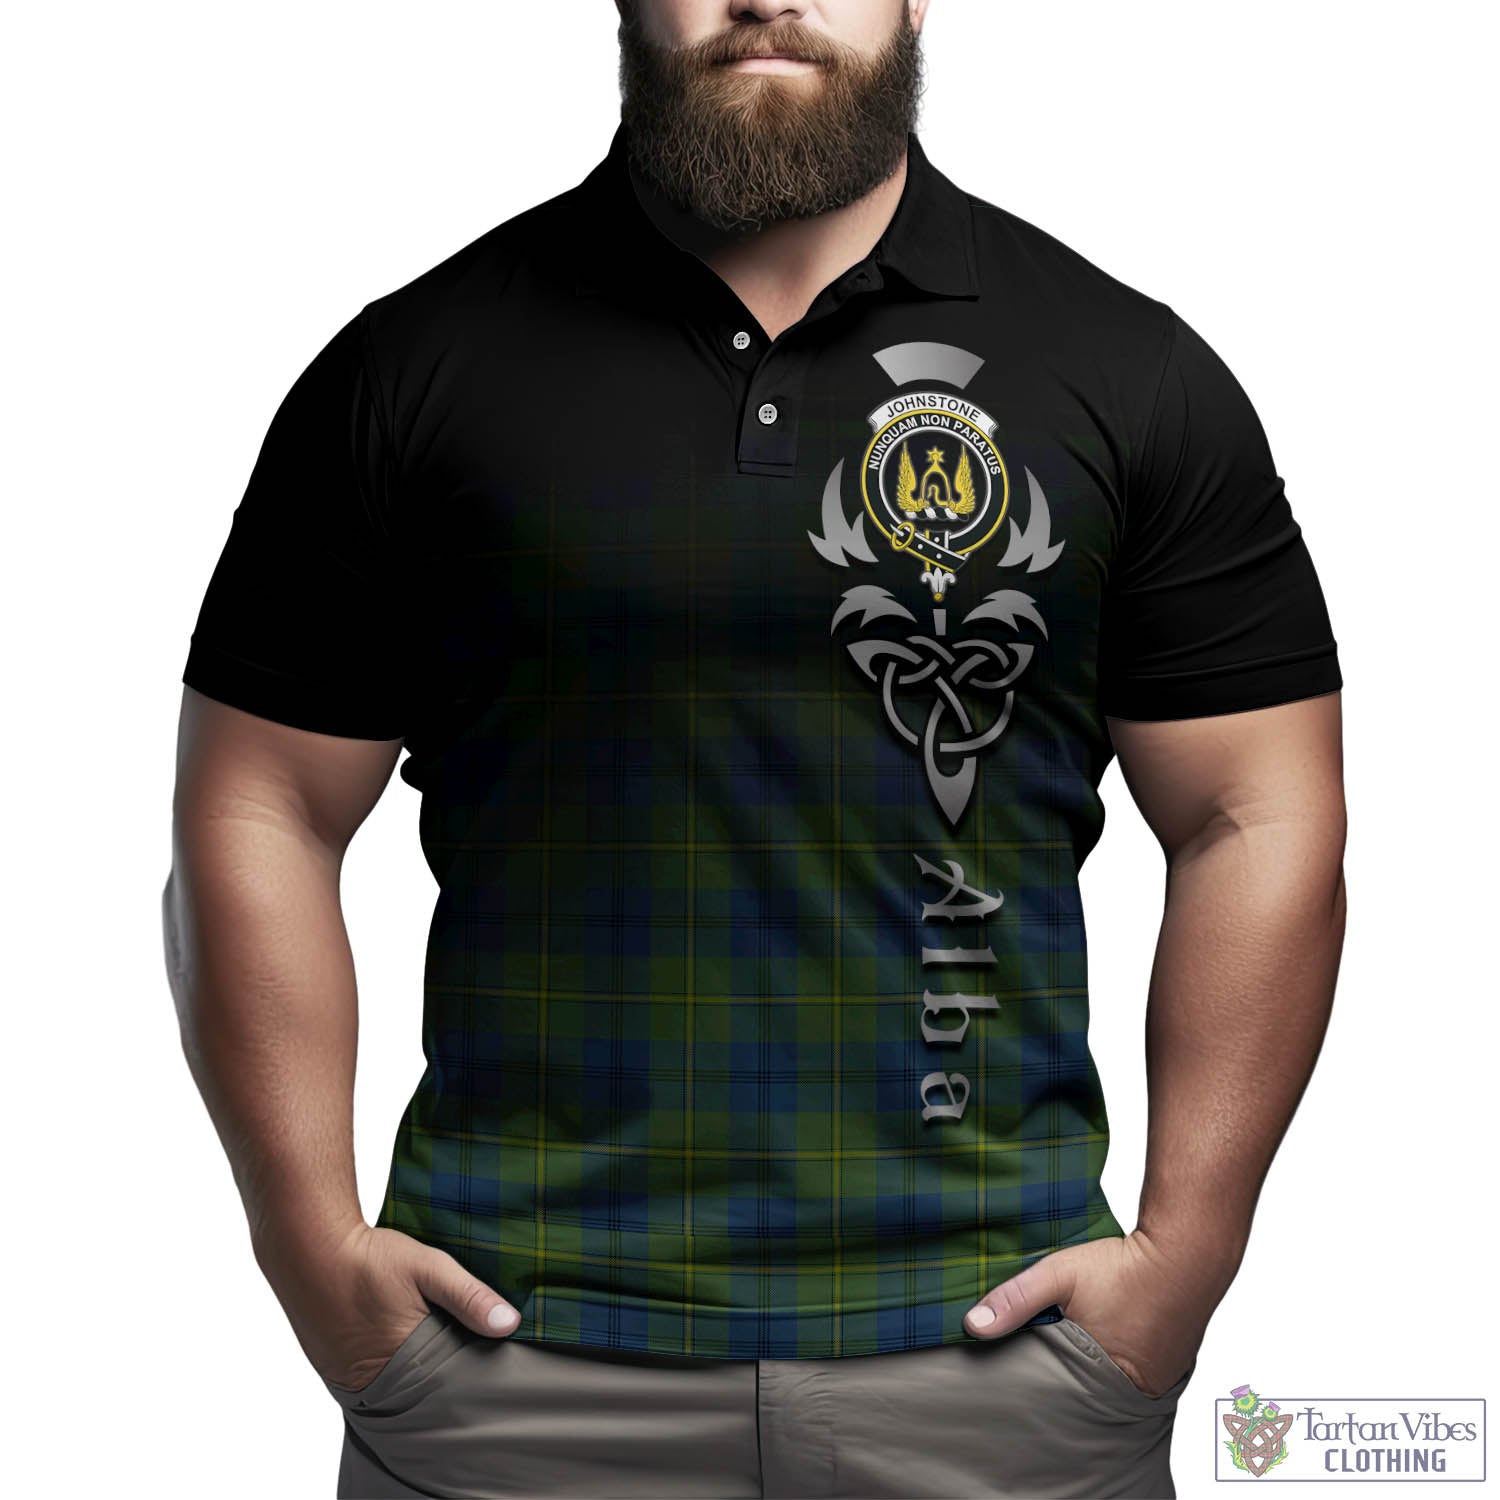 Tartan Vibes Clothing Johnstone-Johnston Ancient Tartan Polo Shirt Featuring Alba Gu Brath Family Crest Celtic Inspired